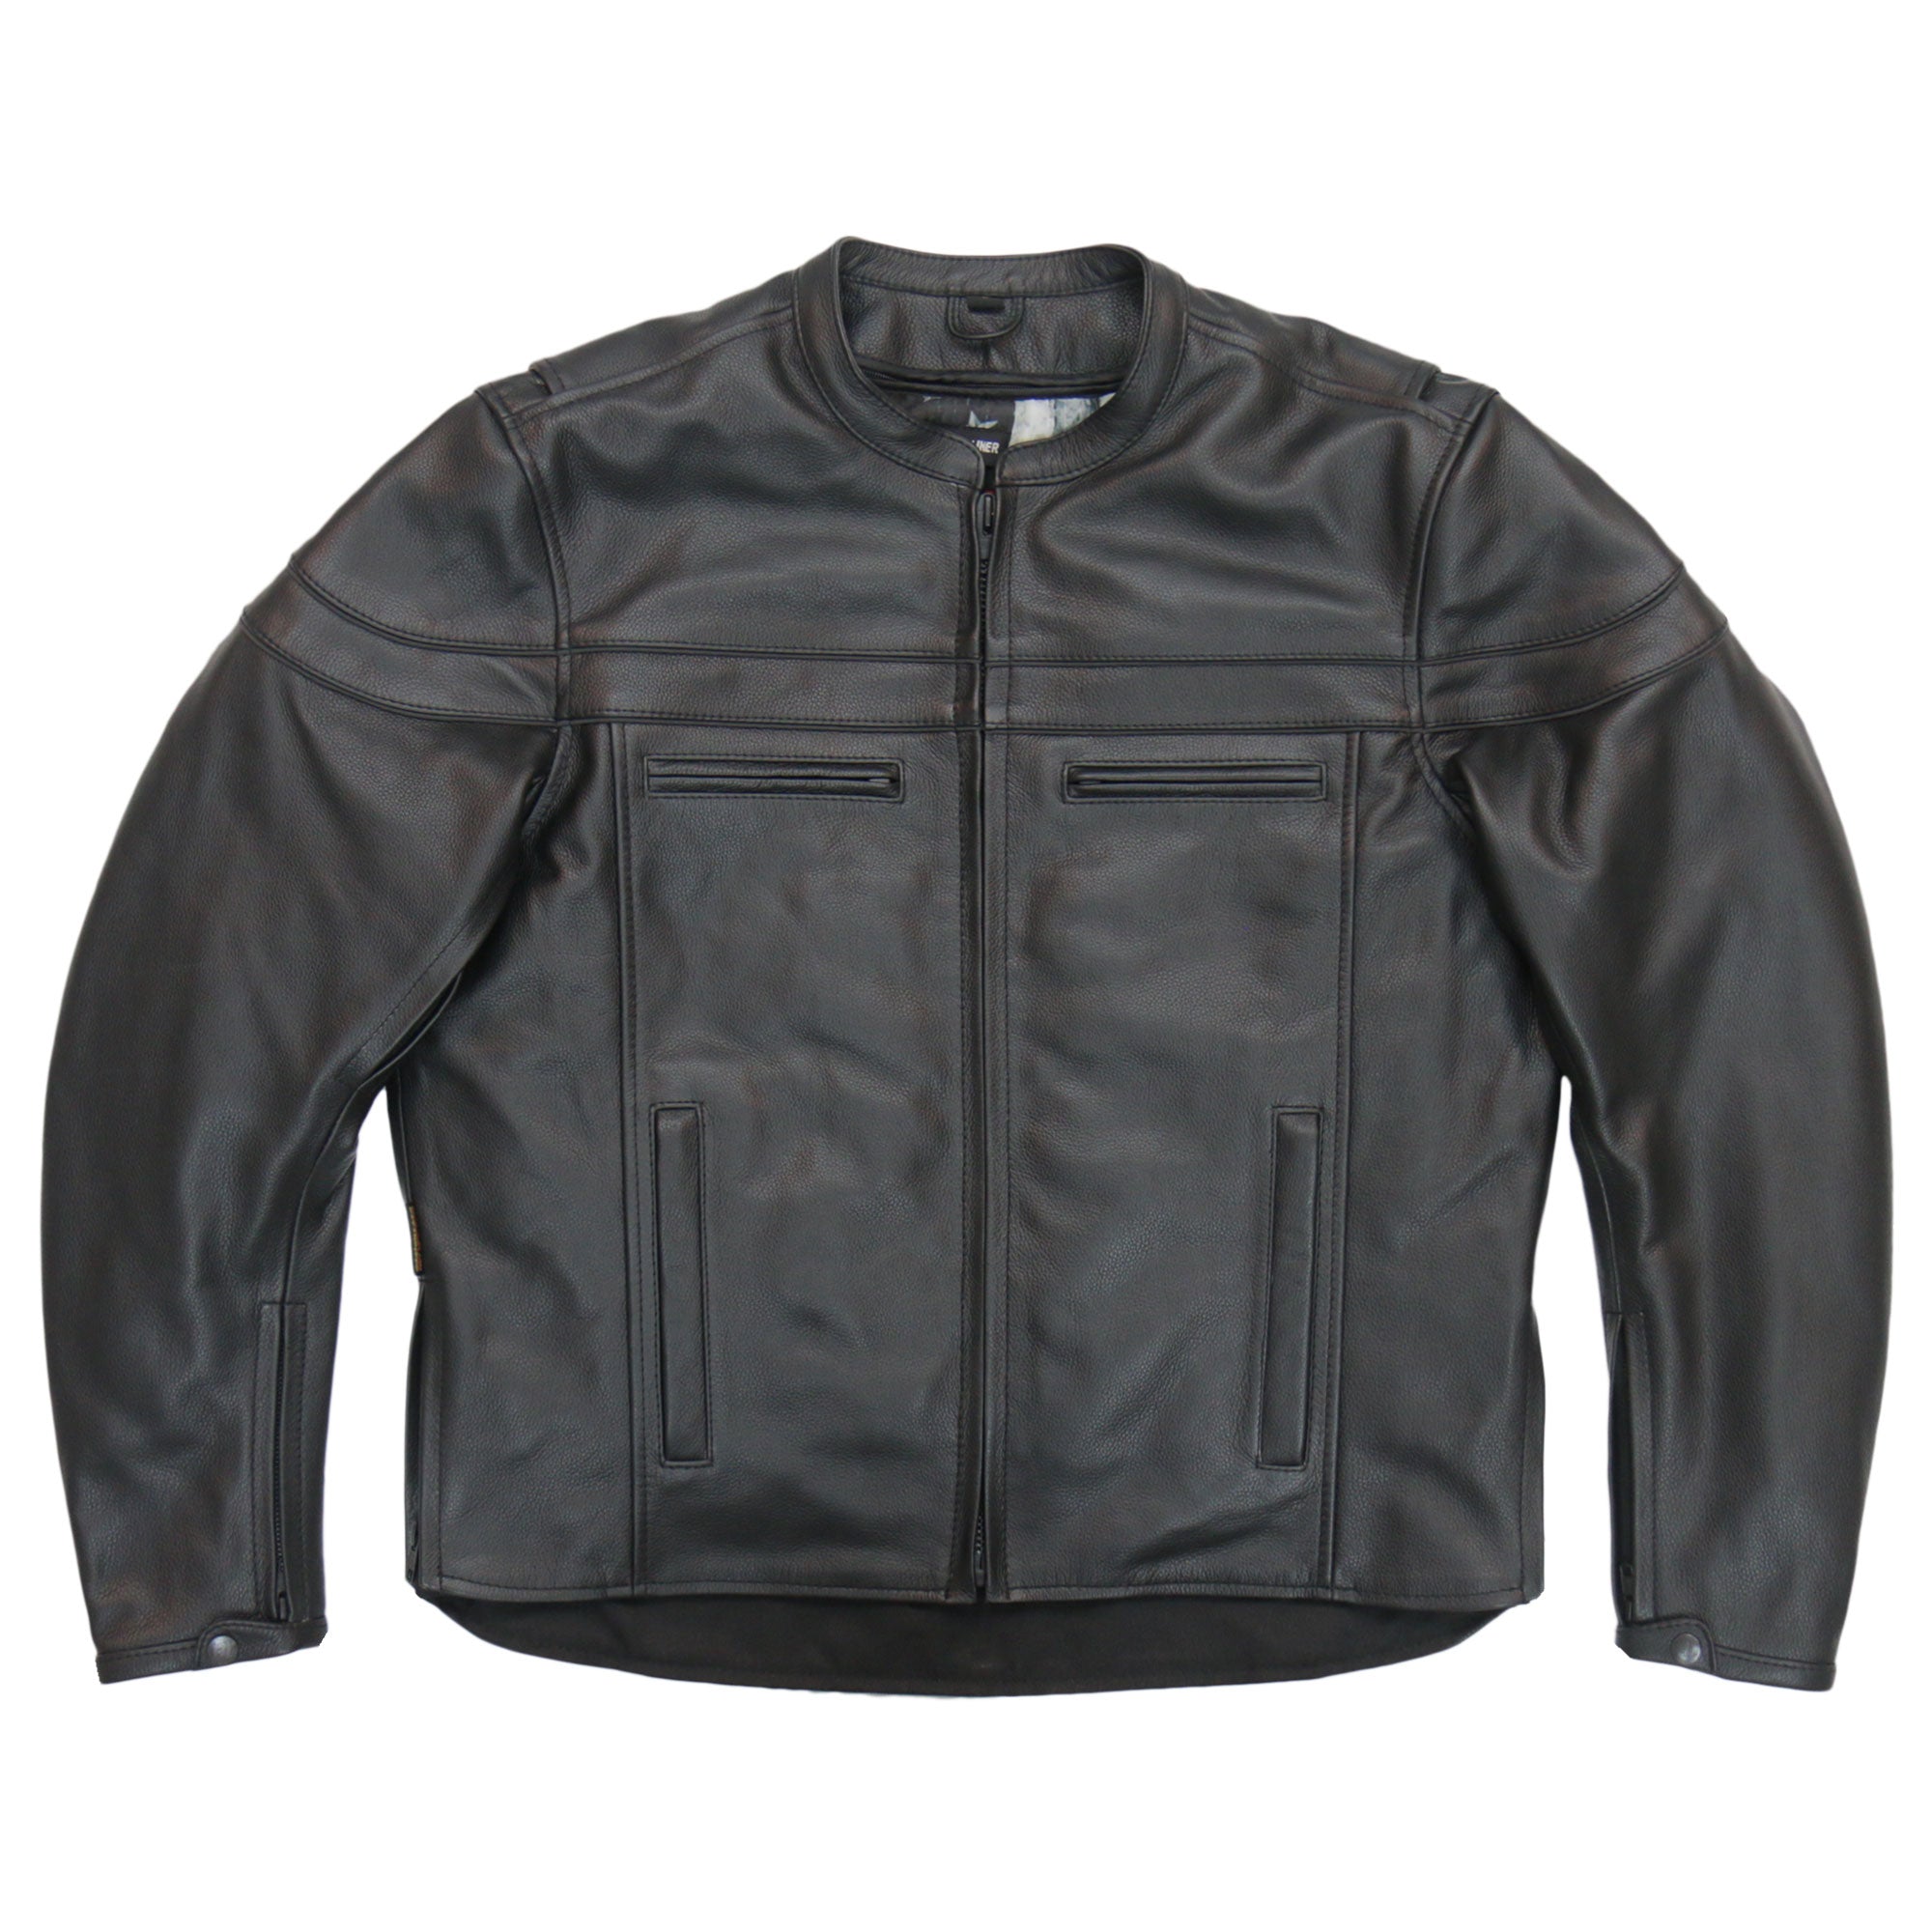 Hot Leathers JKM1032 Men’s Motorcycle Black ‘Skull Flag' Printed Leather Biker Jacket with Concealed Carry Pockets